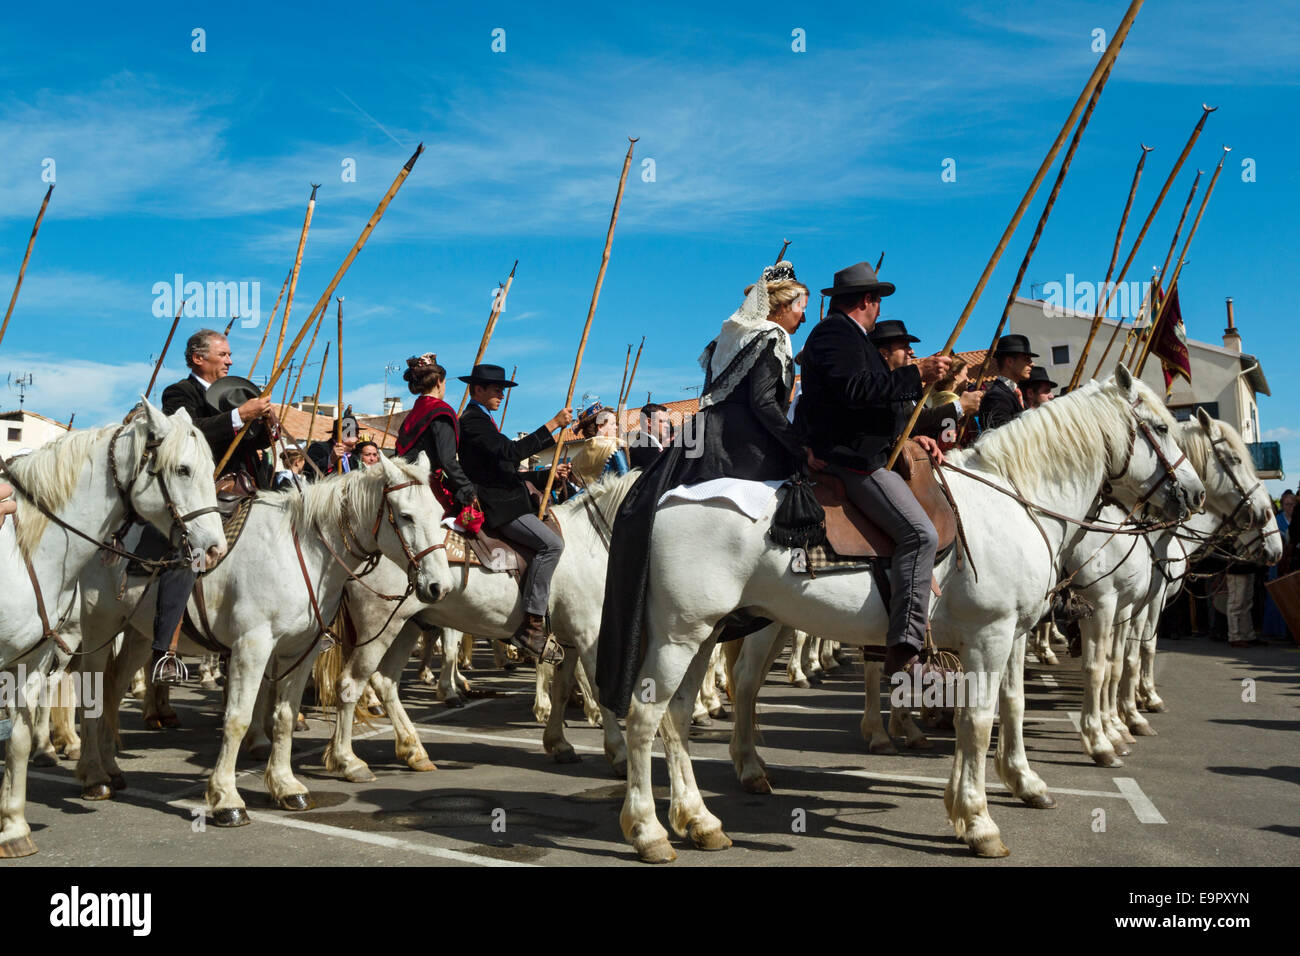 Traditional Costume,Gardians 's Celebration, Arles, Camargue, France Stock Photo